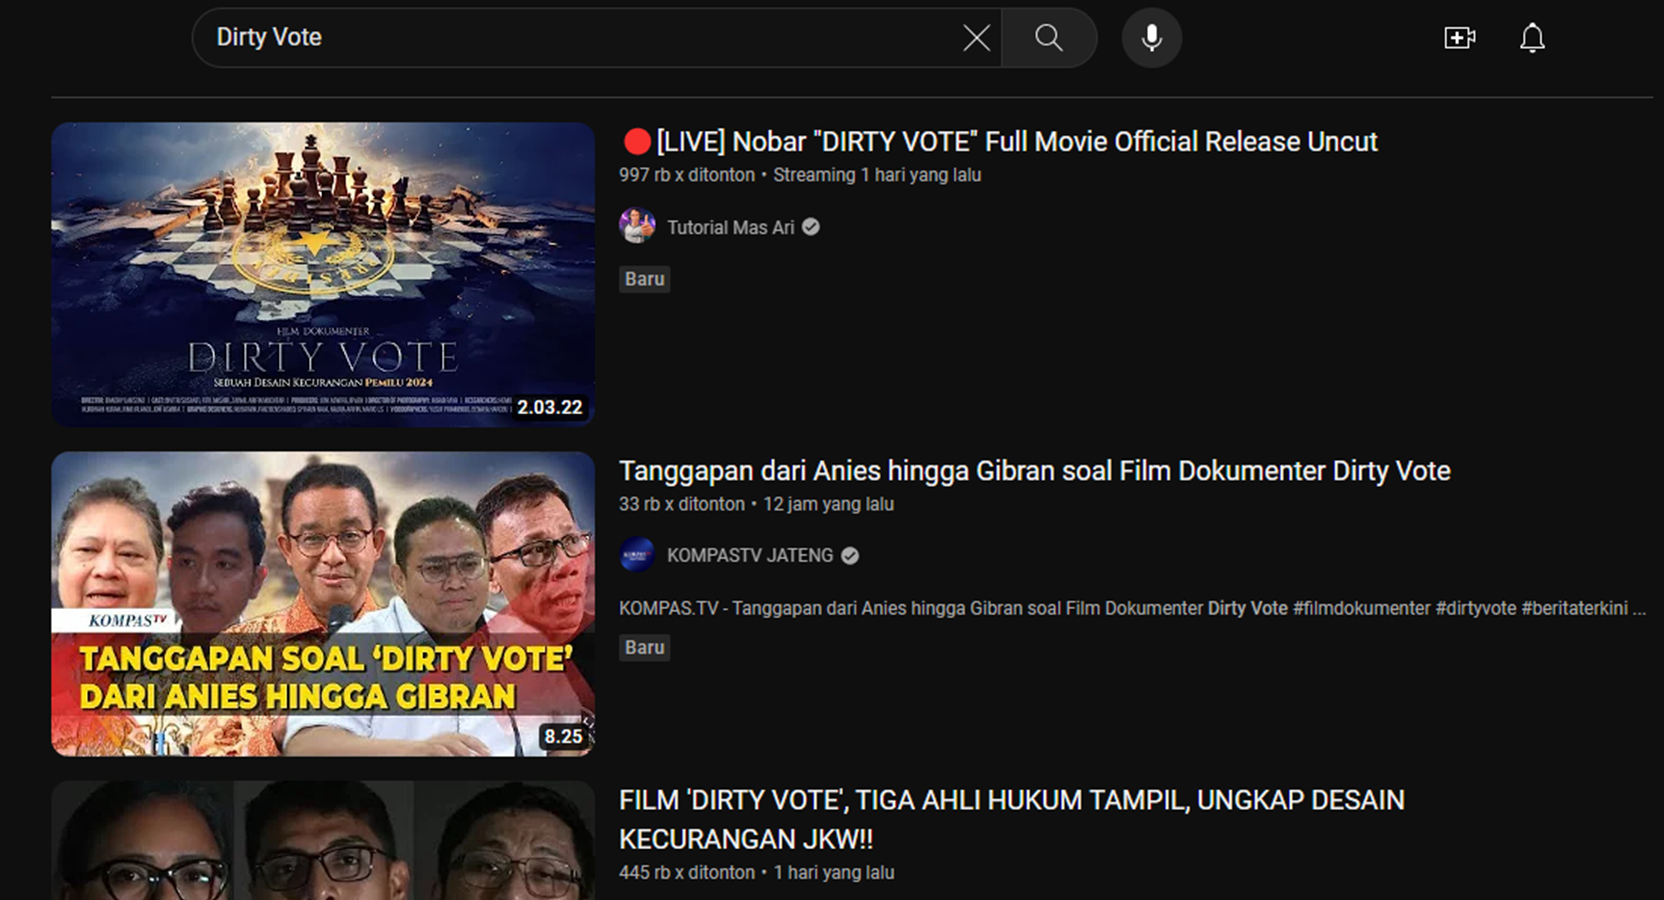 Pencarian Dirty Vote di YouTube.